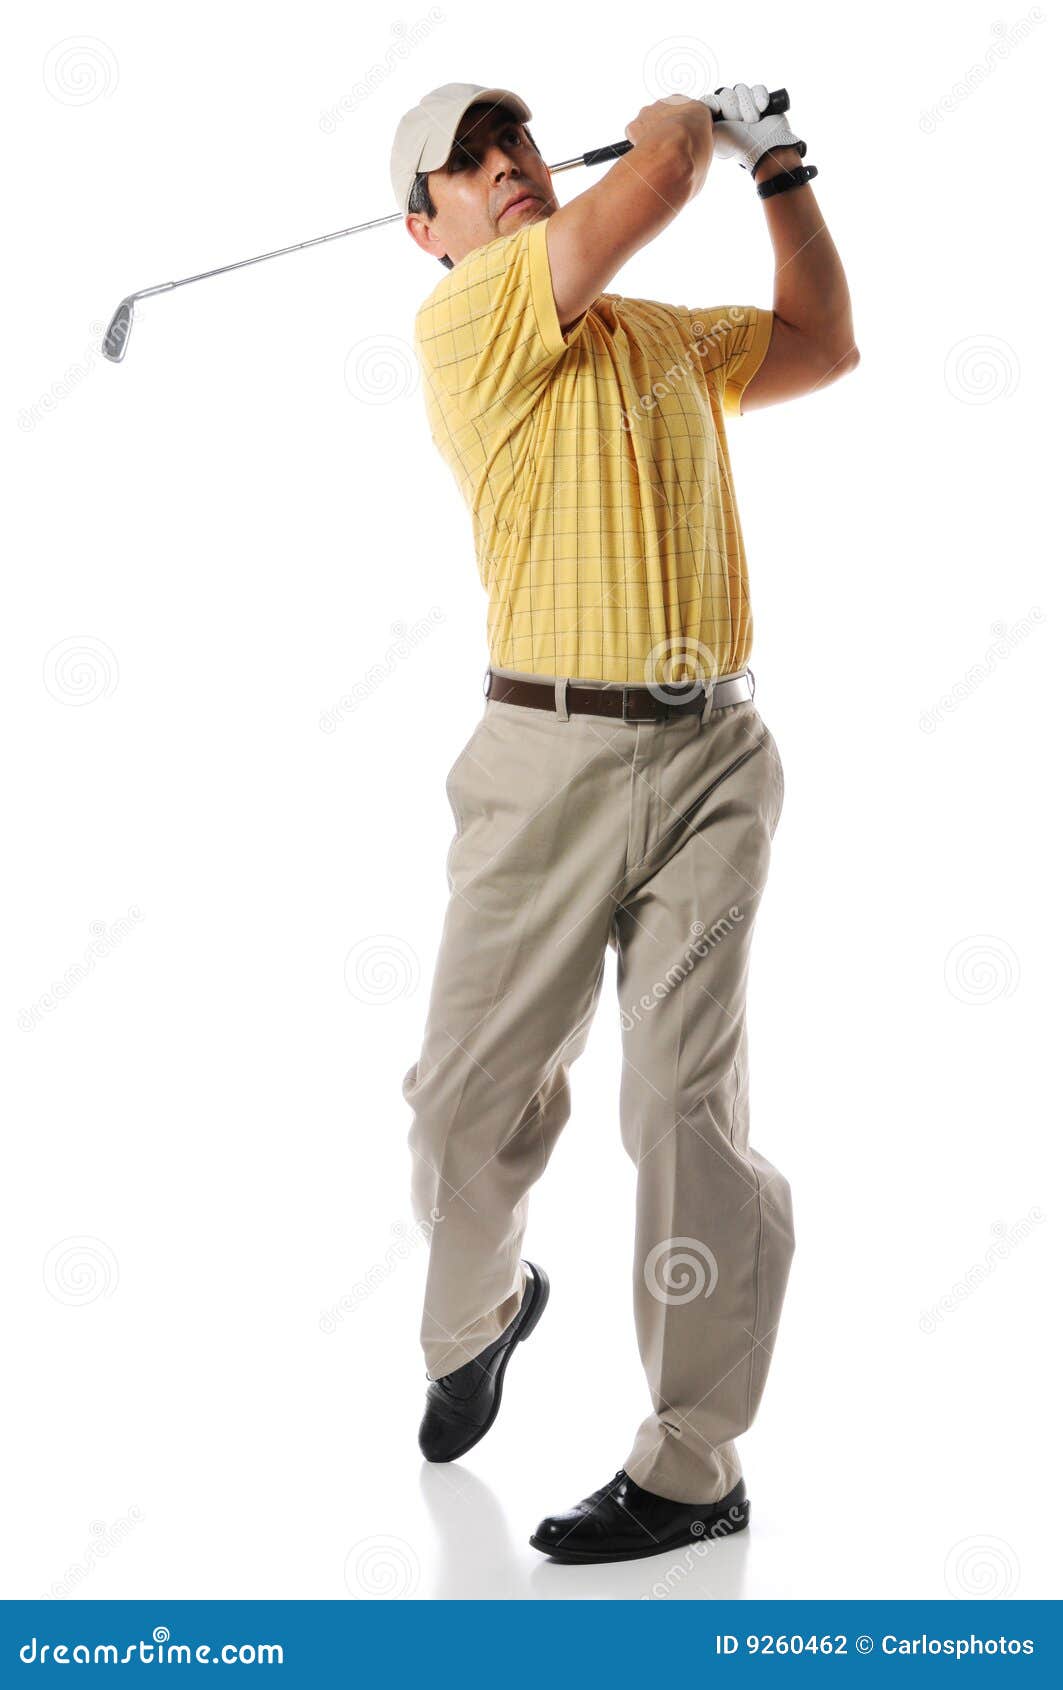 golfer after swing